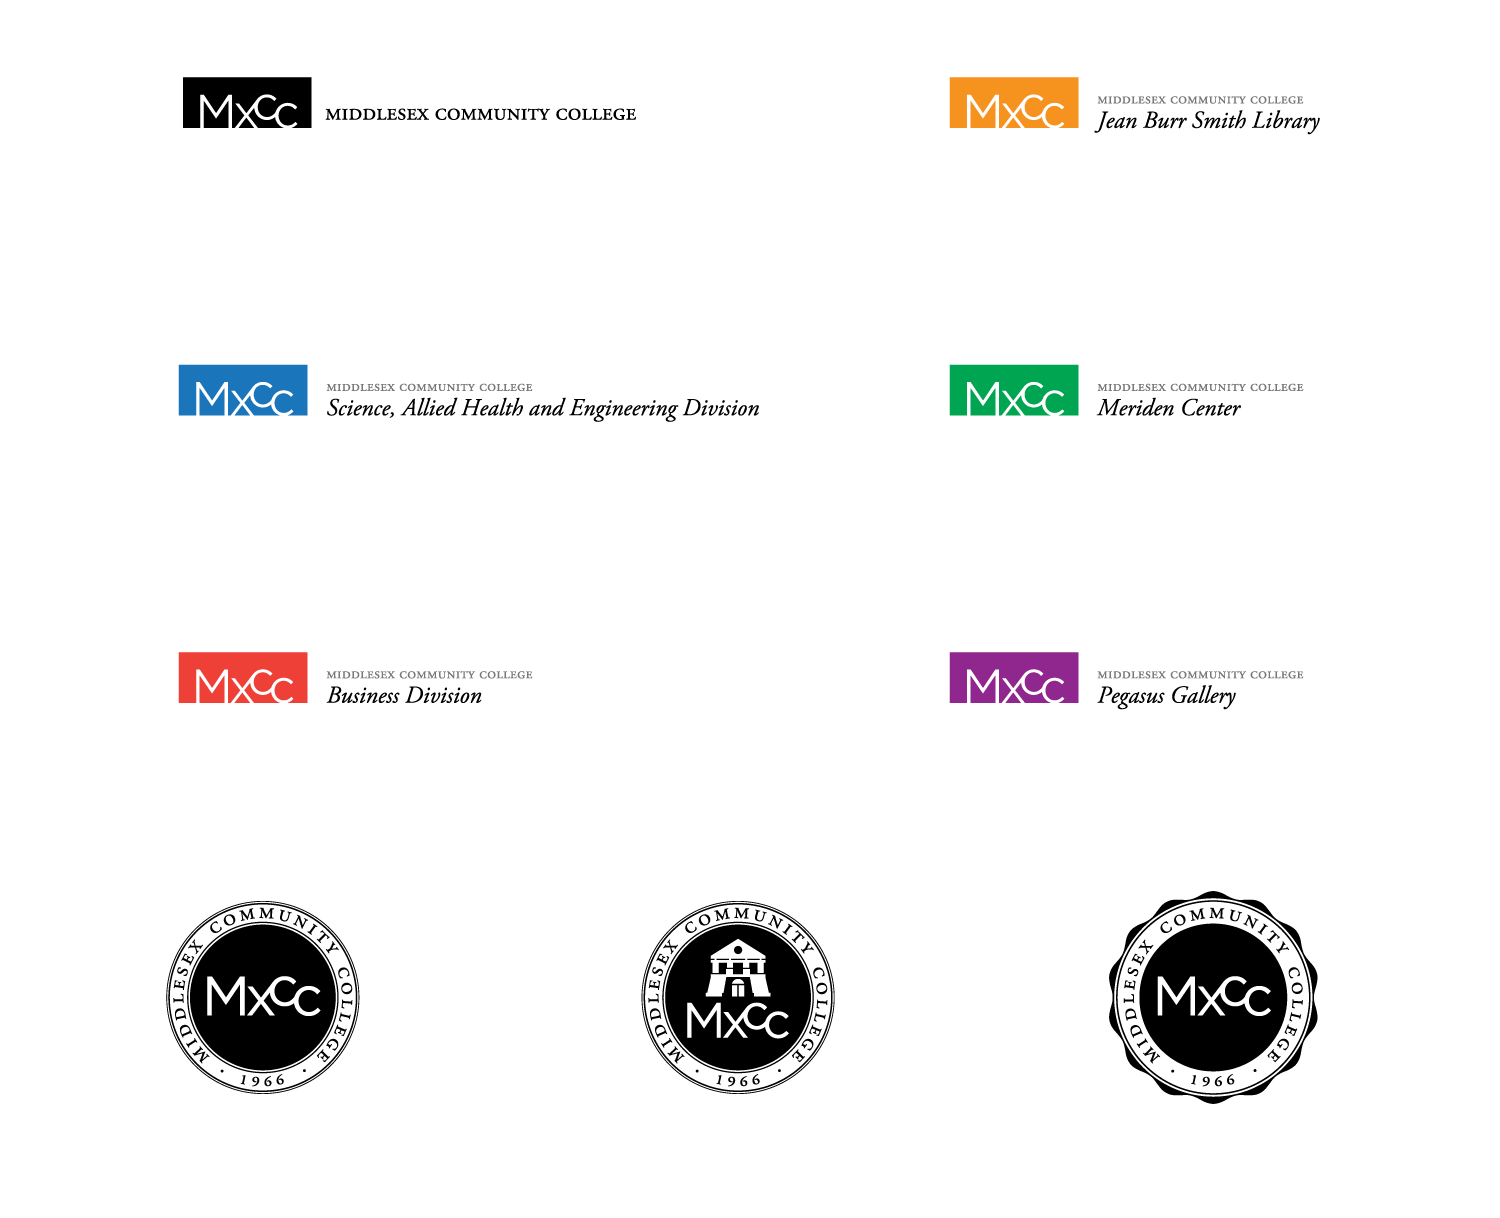 Variations of the MxCC logo